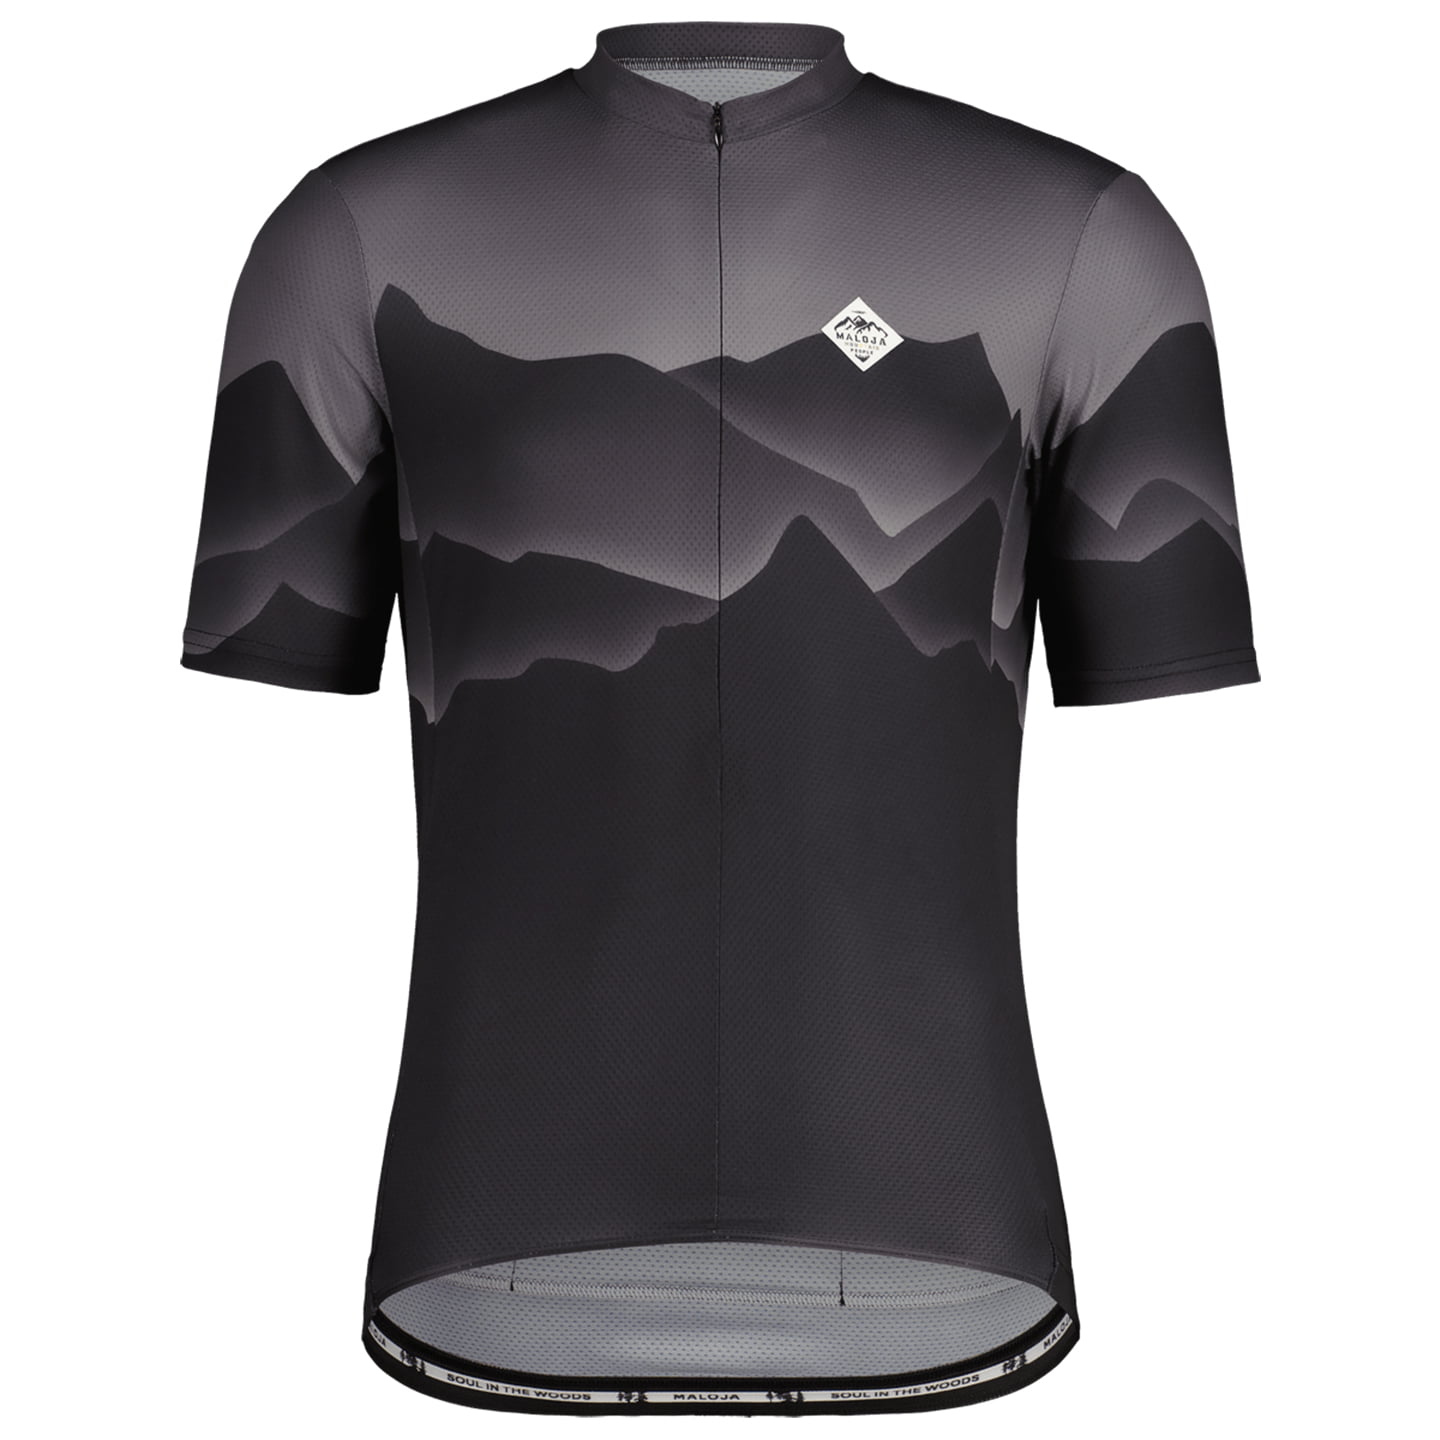 MALOJA ChandolinM. Short Sleeve Jersey Short Sleeve Jersey, for men, size M, Cycling jersey, Cycling clothing